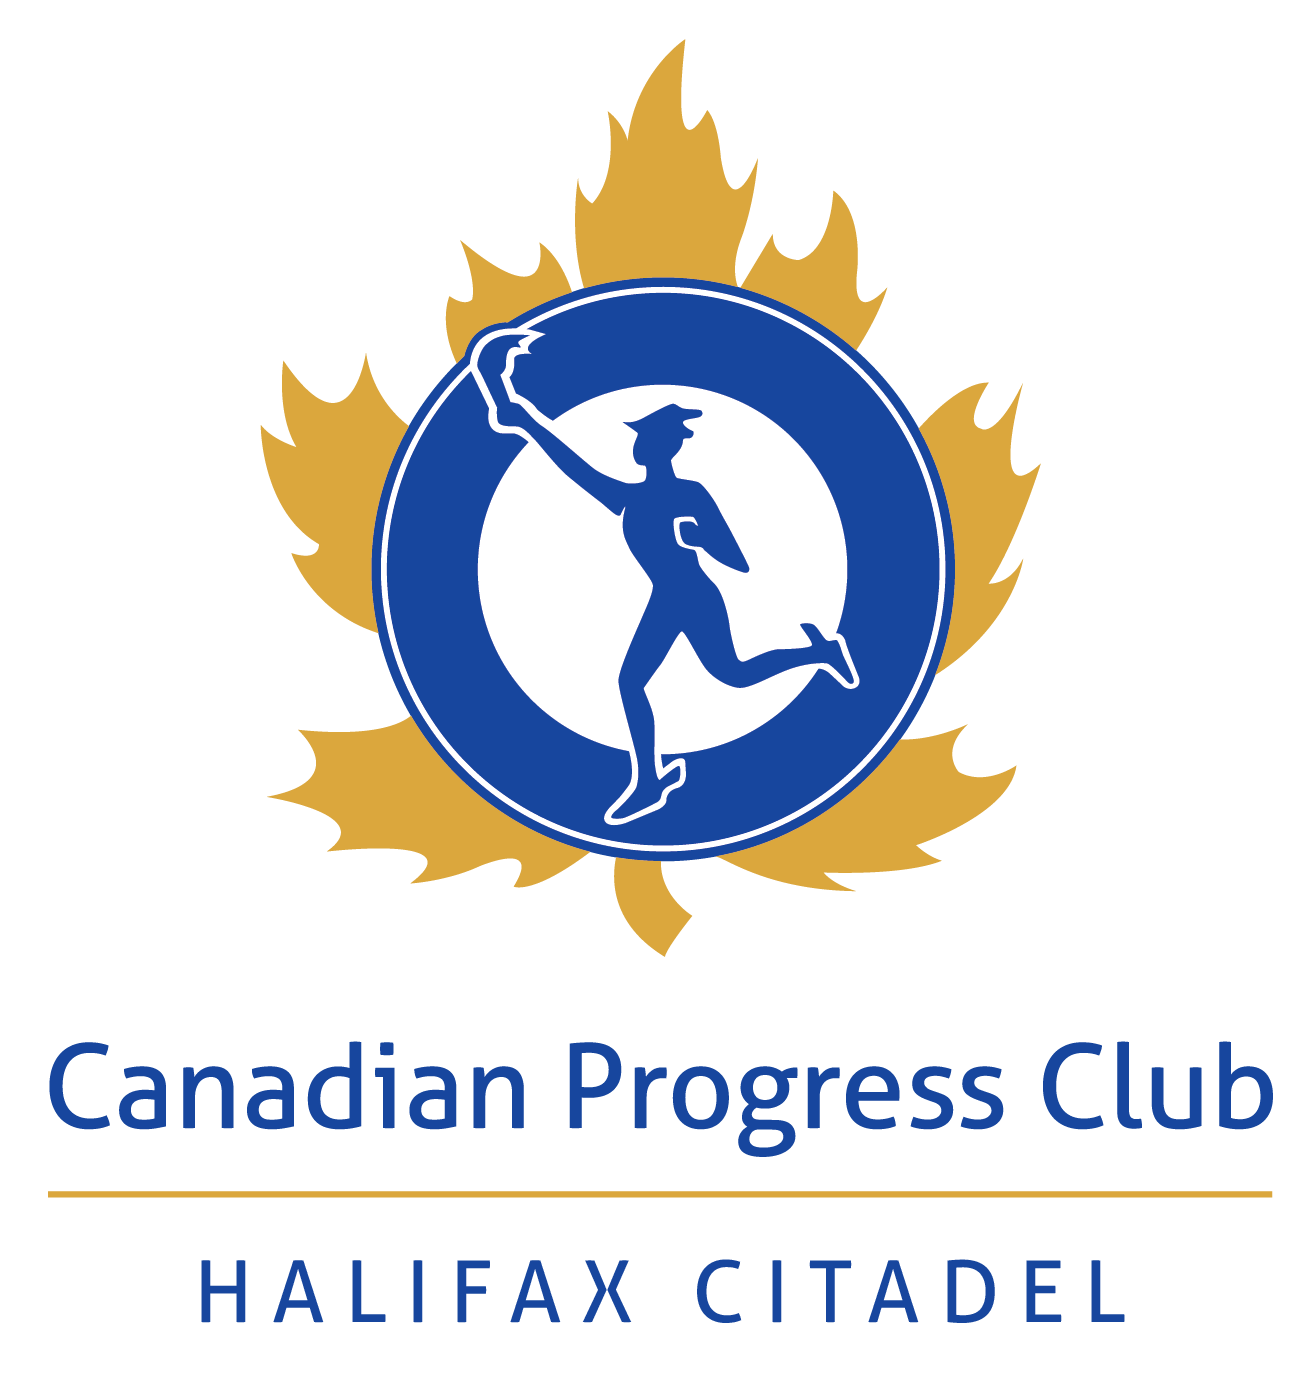 Canadian Progress Club Halifax Citadel